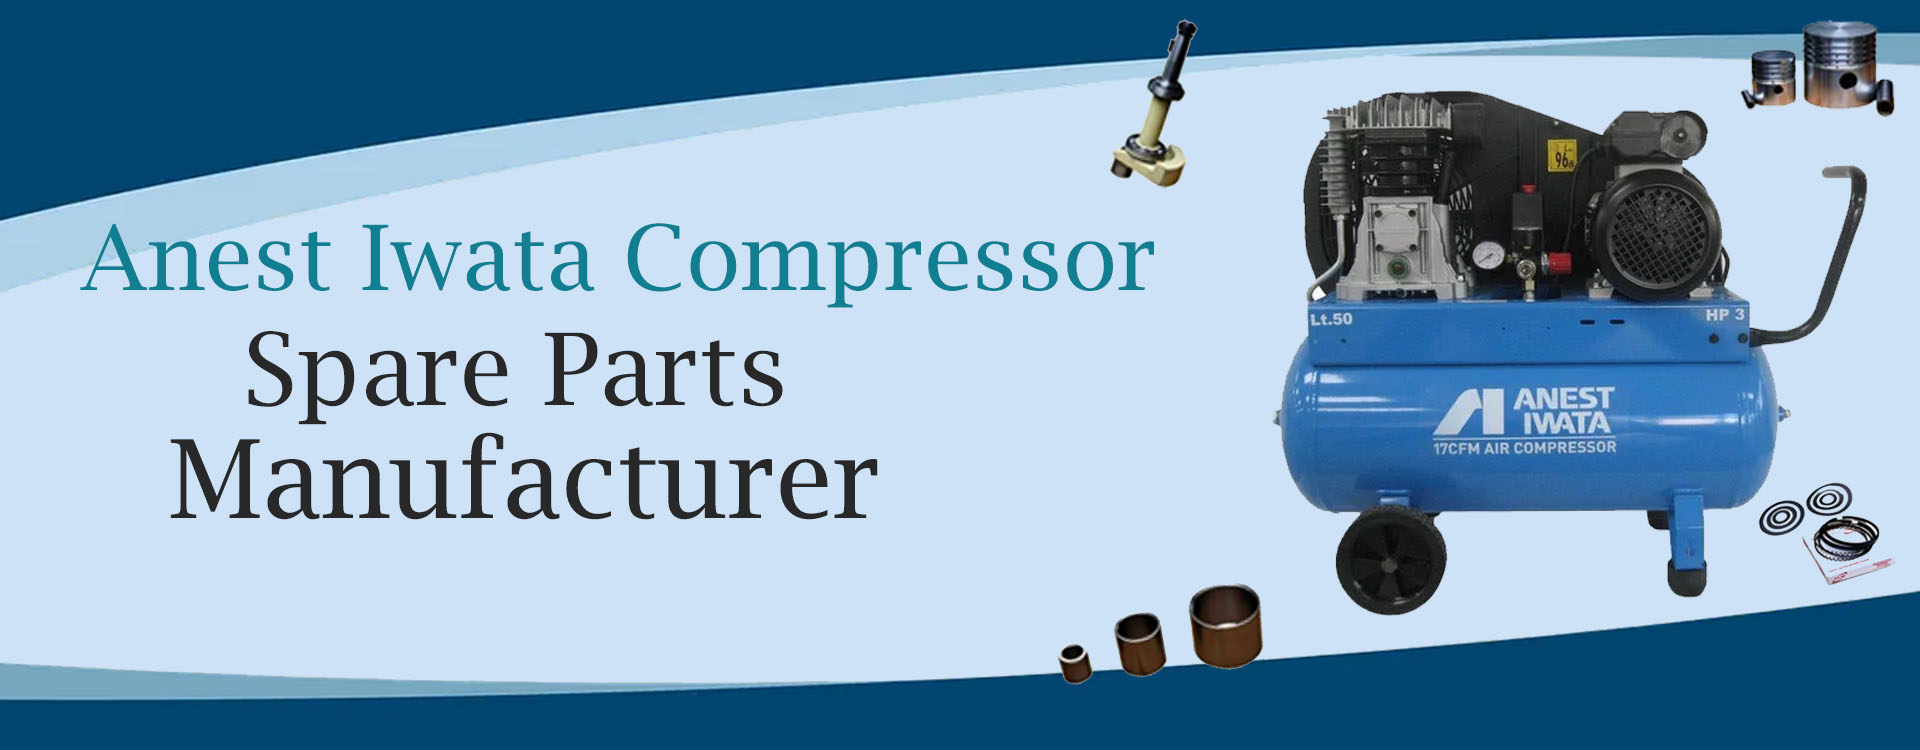 Anestiwata Compressor Spare Part Manufacturer & Supplier In india